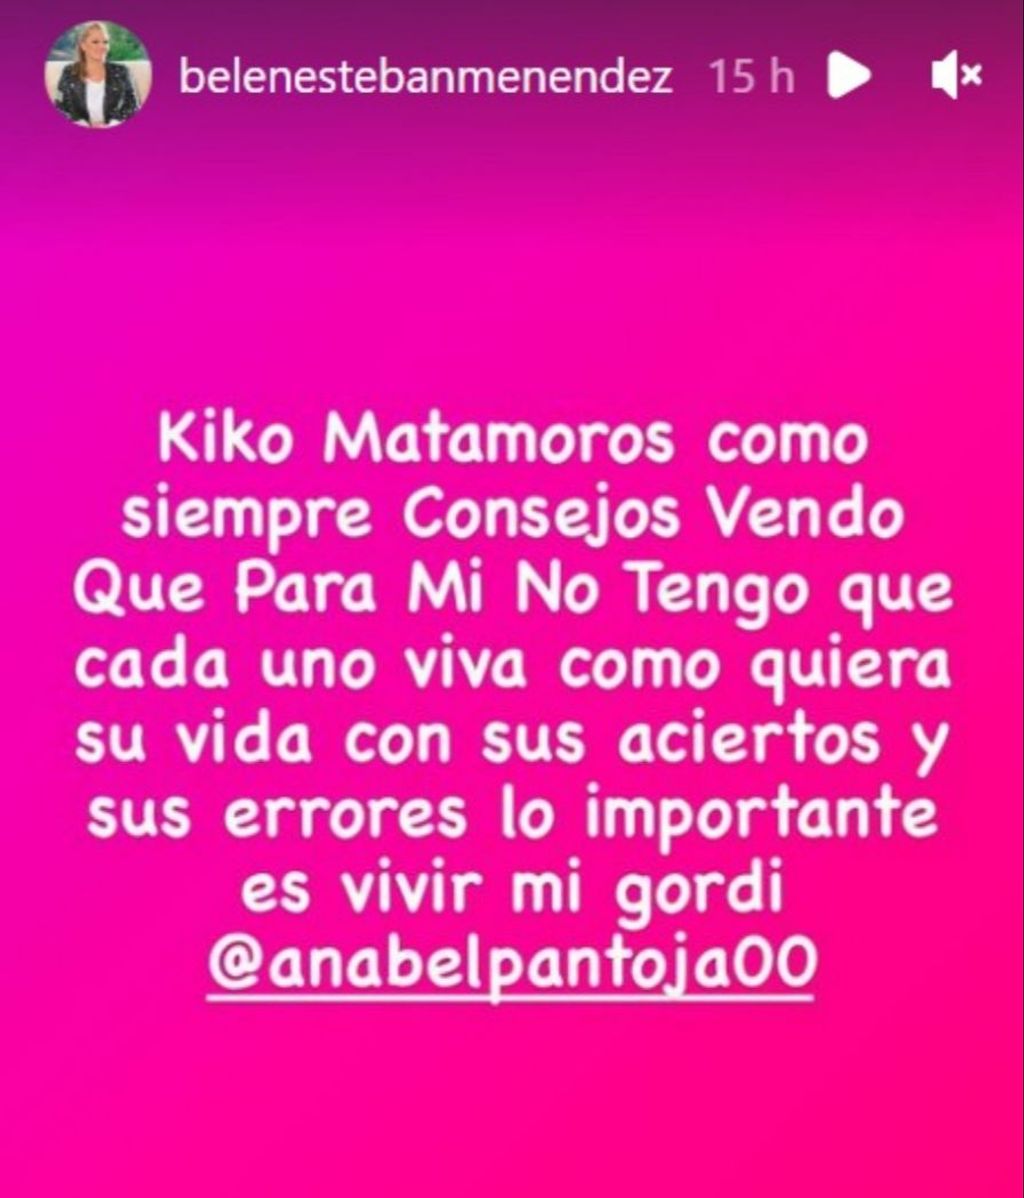 Belén Esteban critica a Kiko Matamoros para defender a Anabel Pantoja